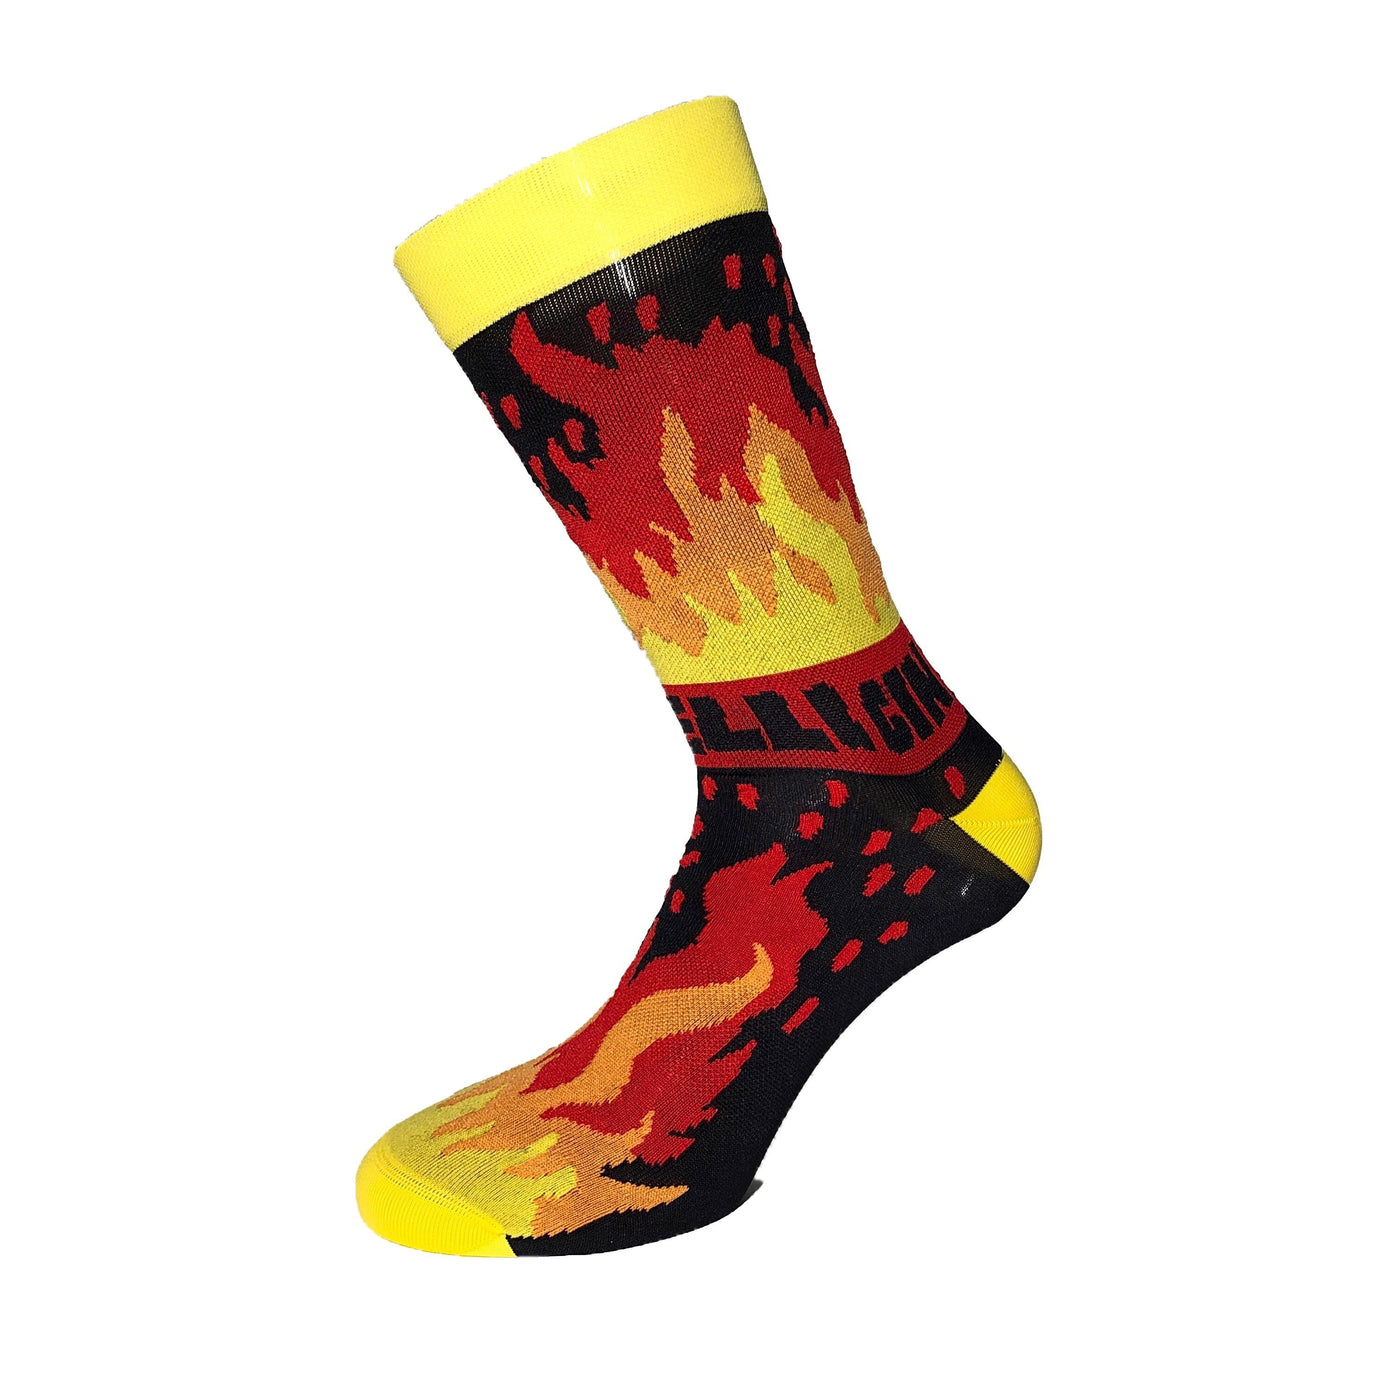 ANA BENAROYA 'FIRE' SOCKS, Socks, IMG.2